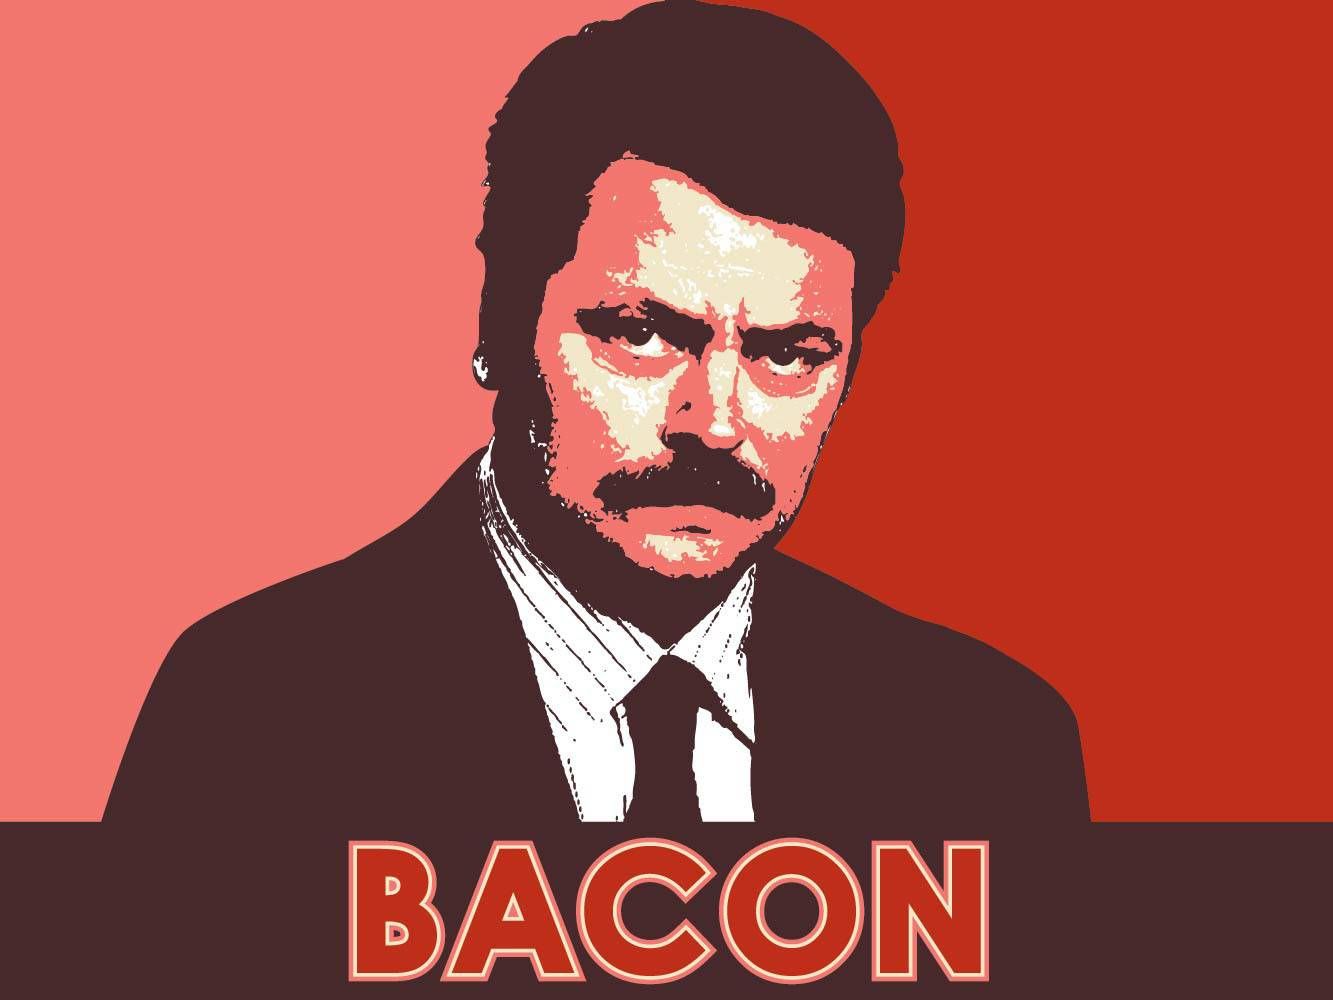 Ron Swanson Bacon wallpaper